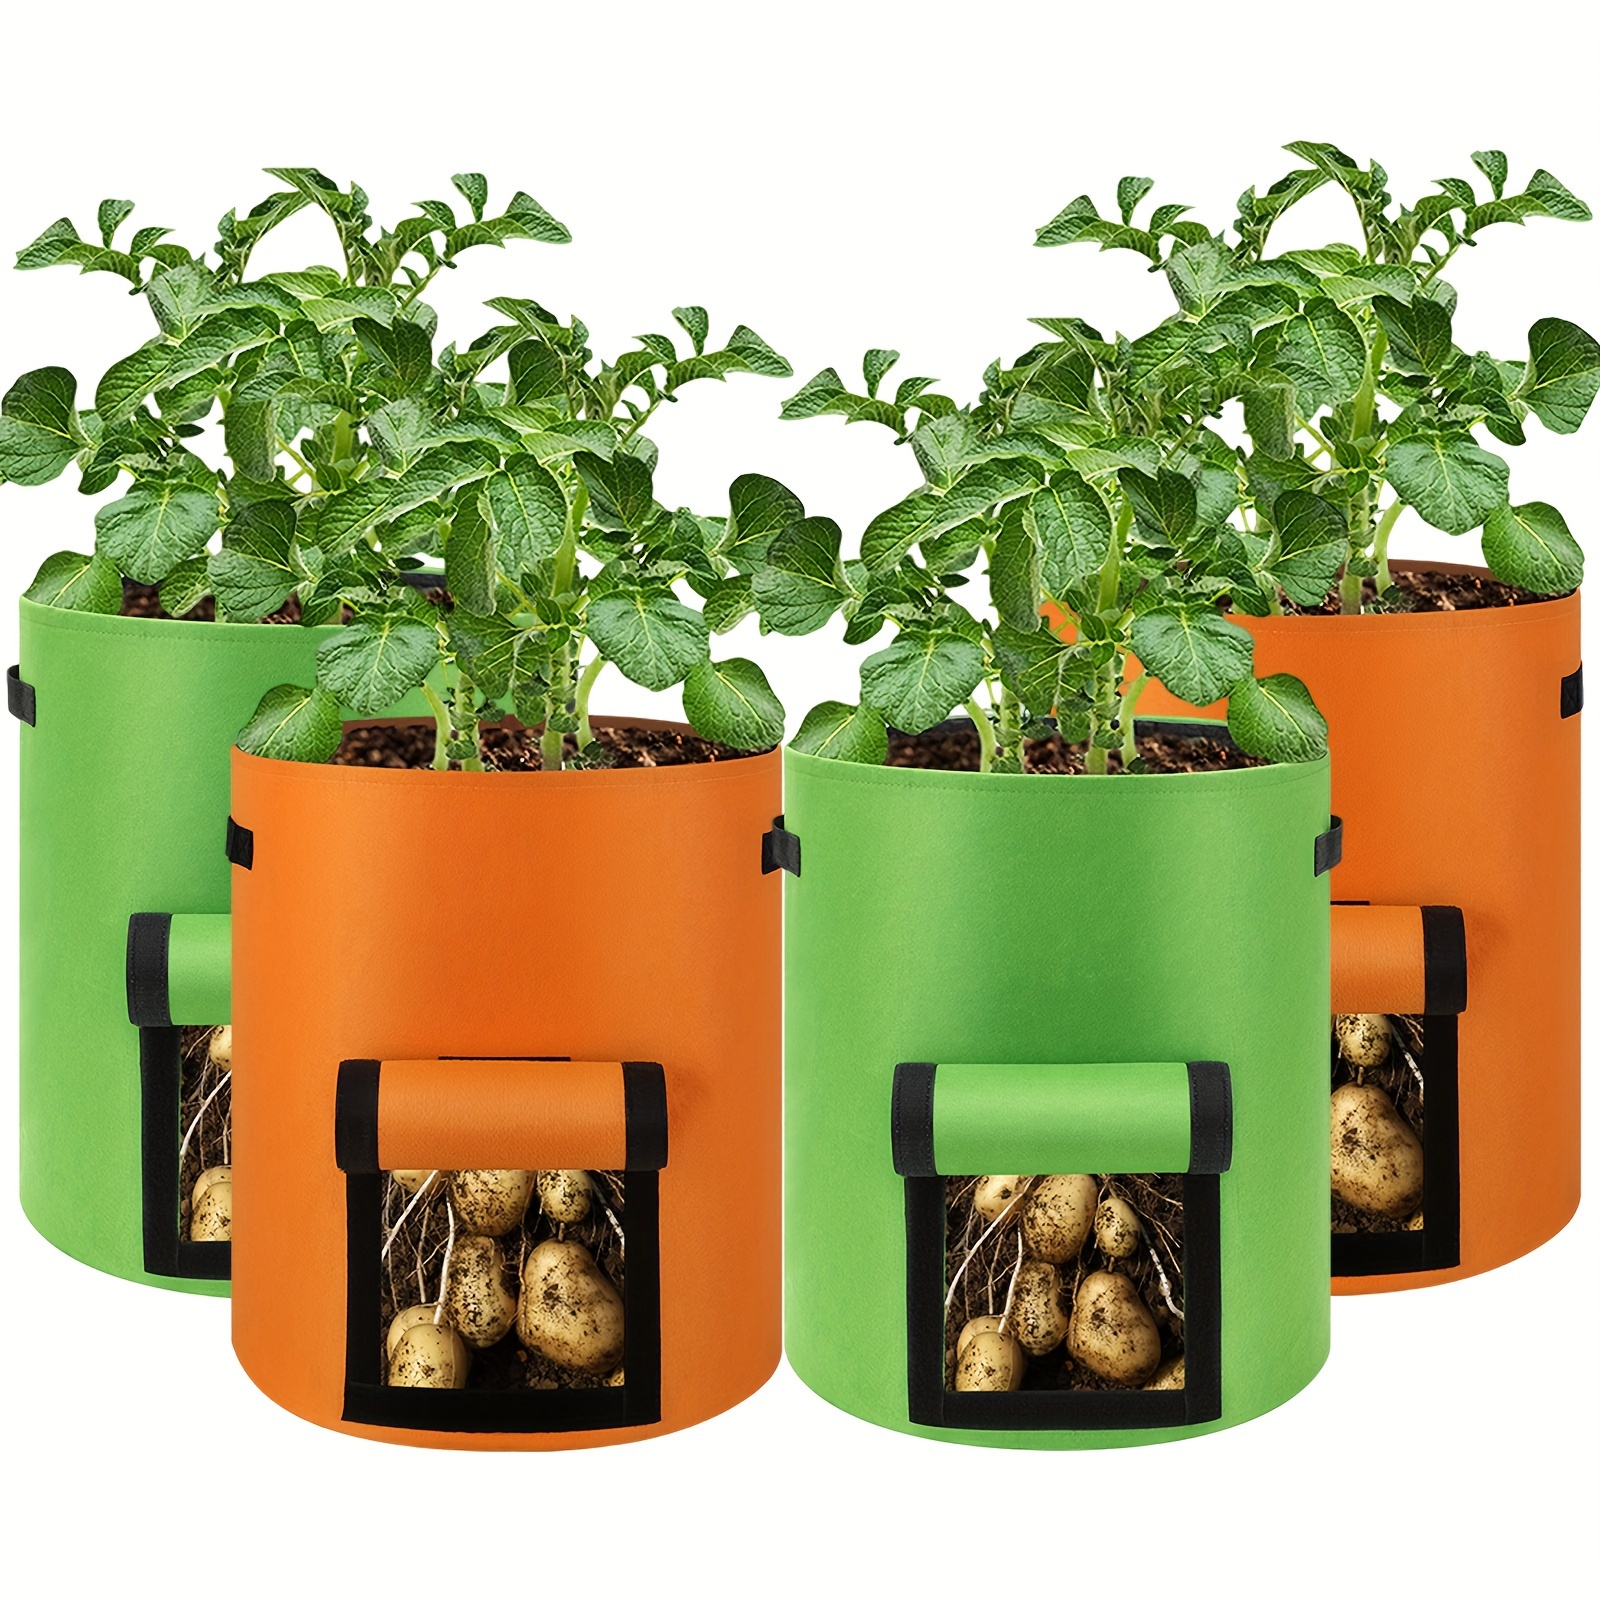 2pcs Garden Potato Grow Bags Planter PE Cloth Vegetable Pot Planting Grow  Bags Potato Bag Grow Container Gardening Tool 